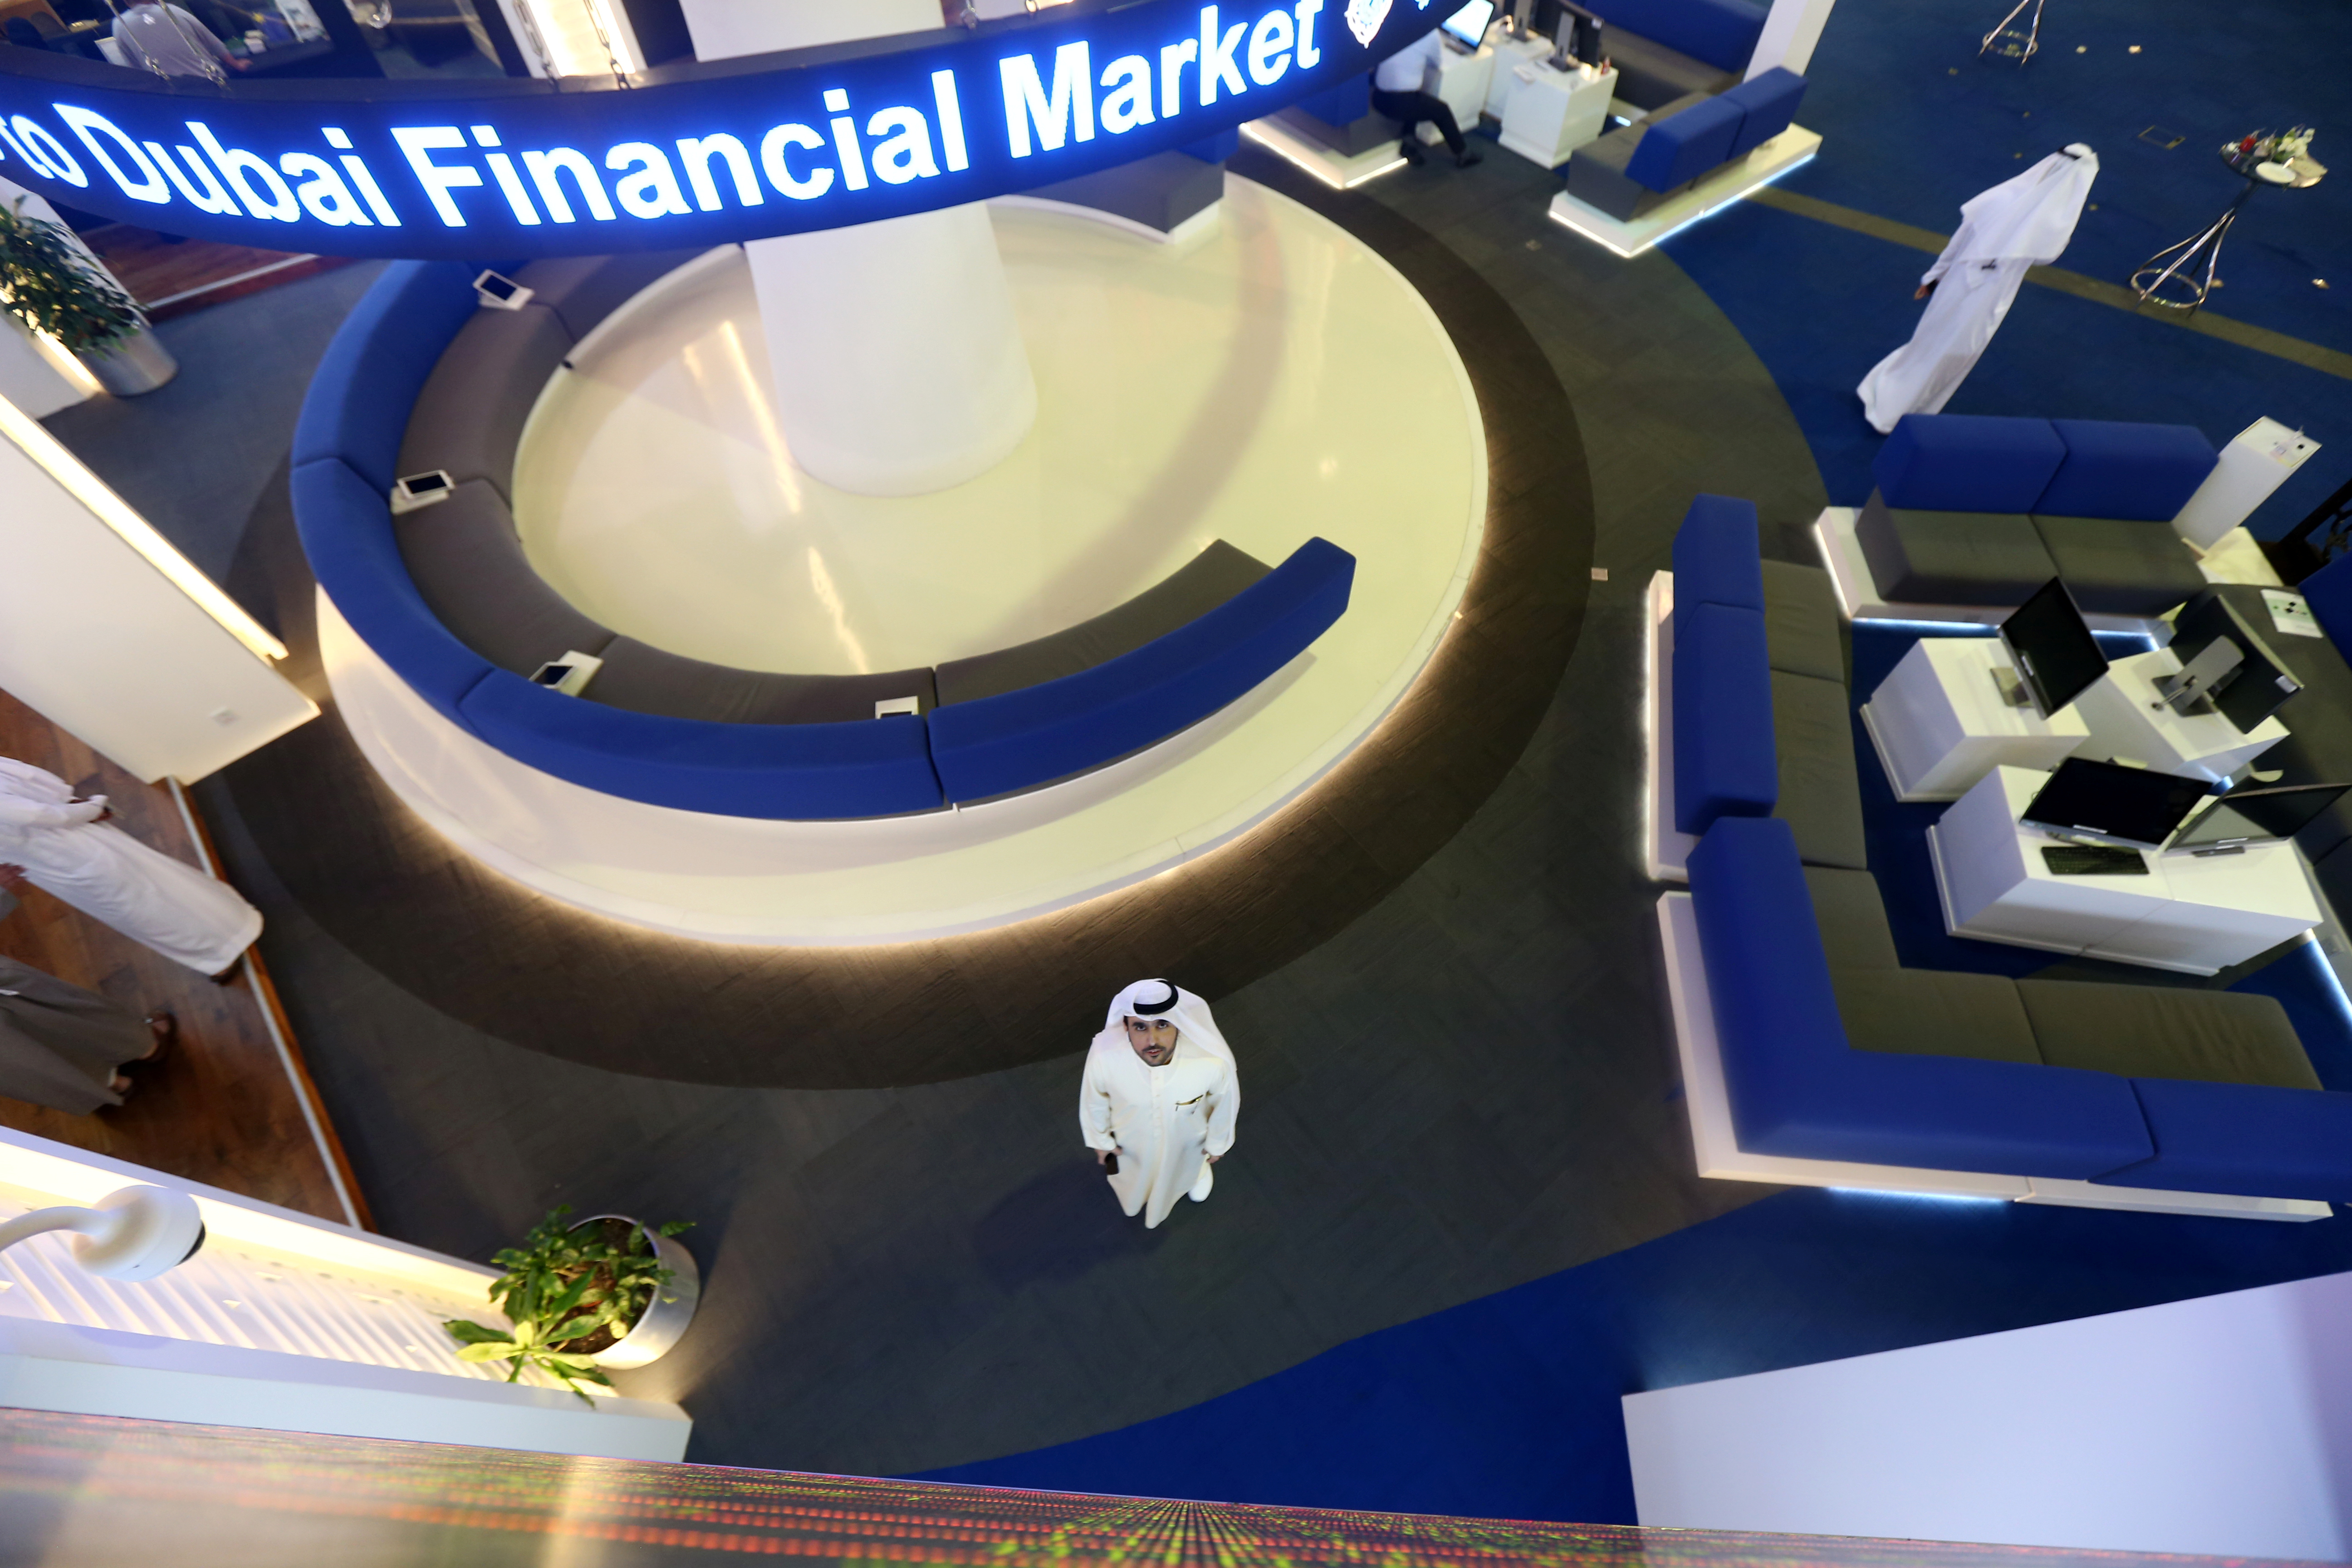 Investor looks at the screen at the Dubai International Financial Market in Dubai